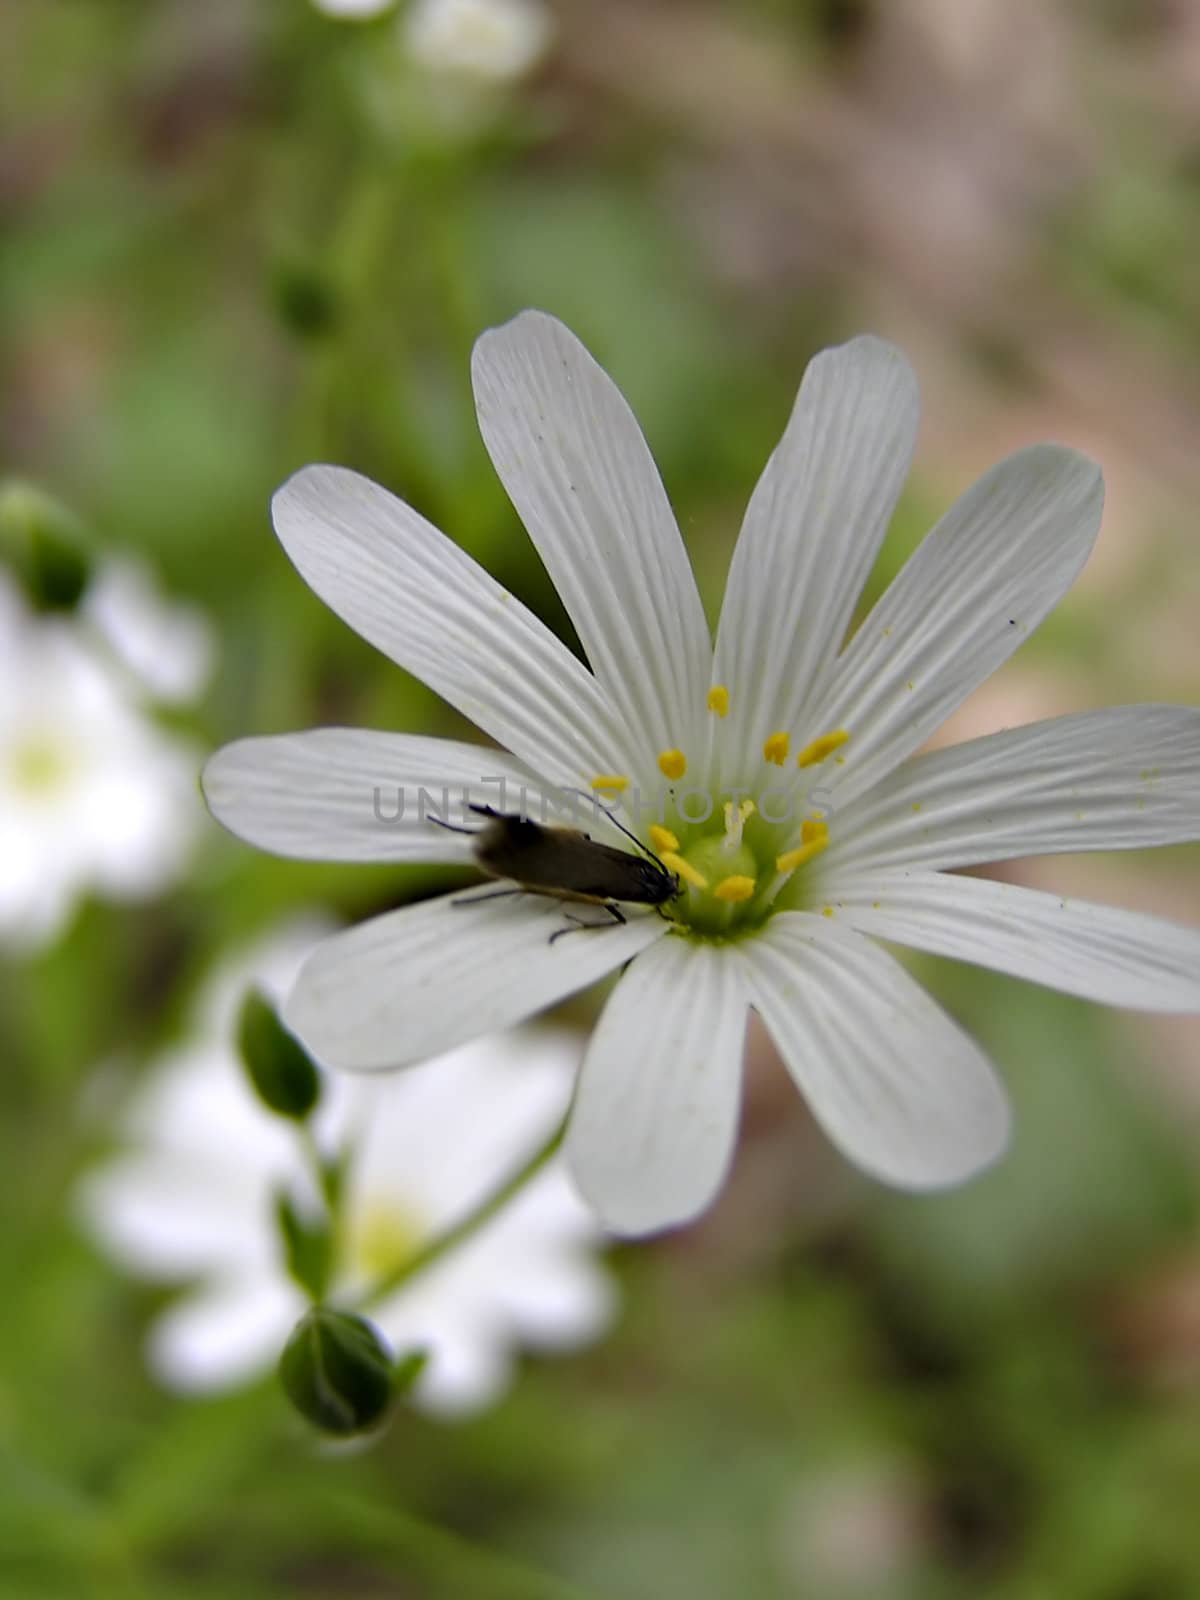 Bug On Flower by penta